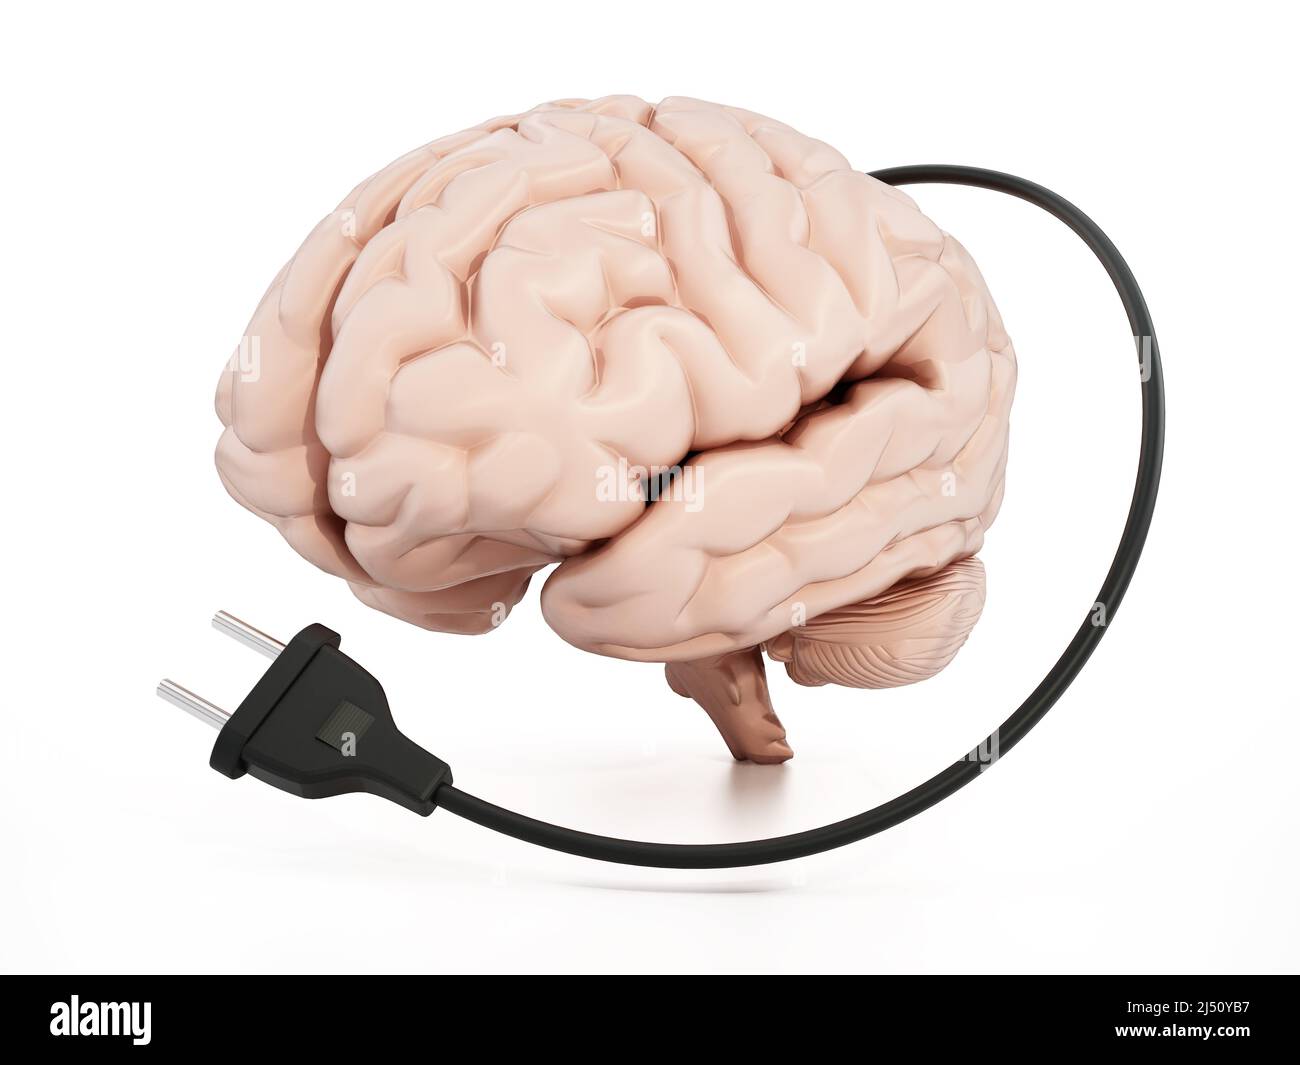 Human brain with electric plug. 3D illustration. Stock Photo